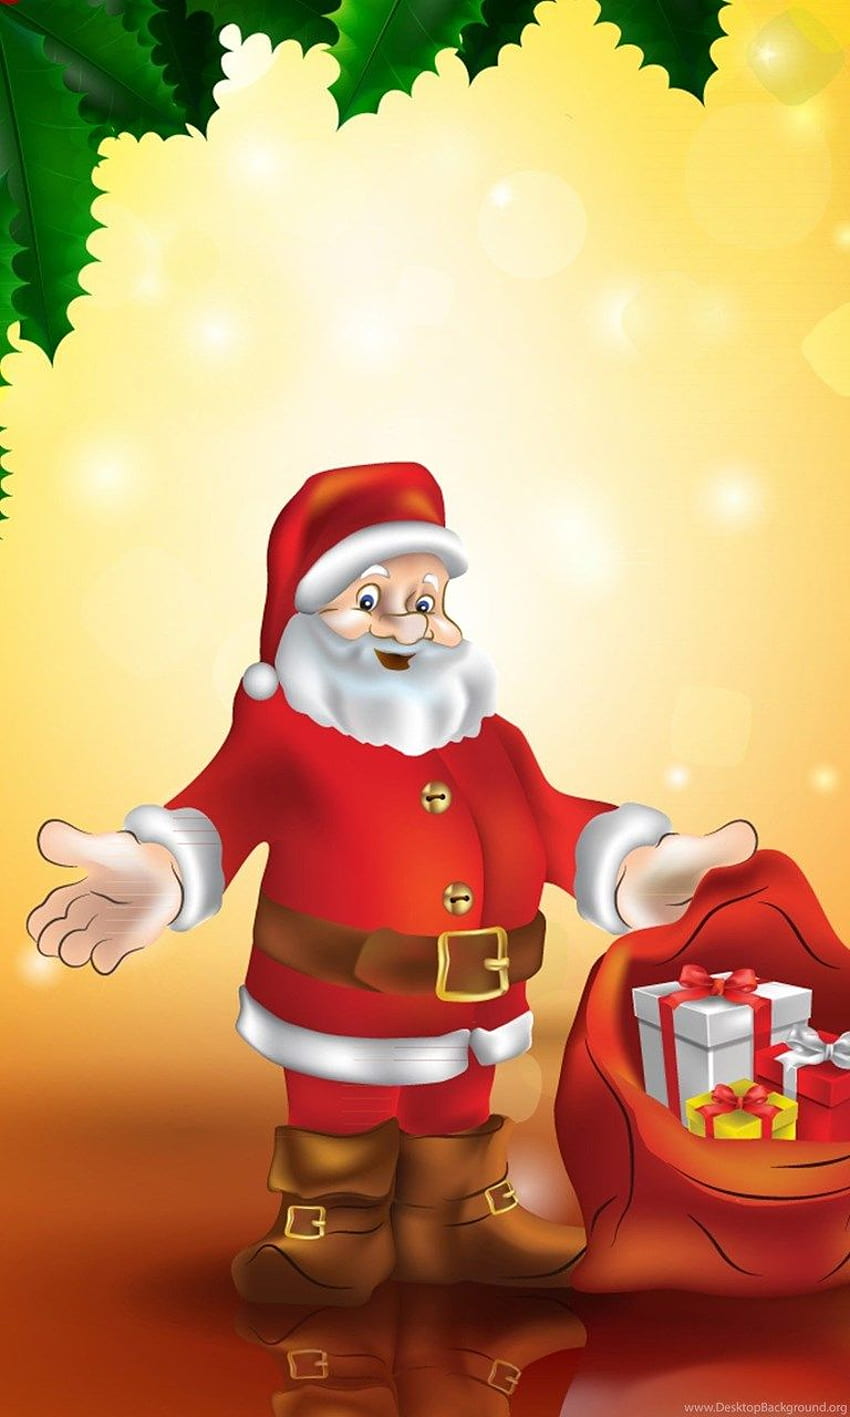 Holly Jolly Santa Claus Live Wallpaper - free download